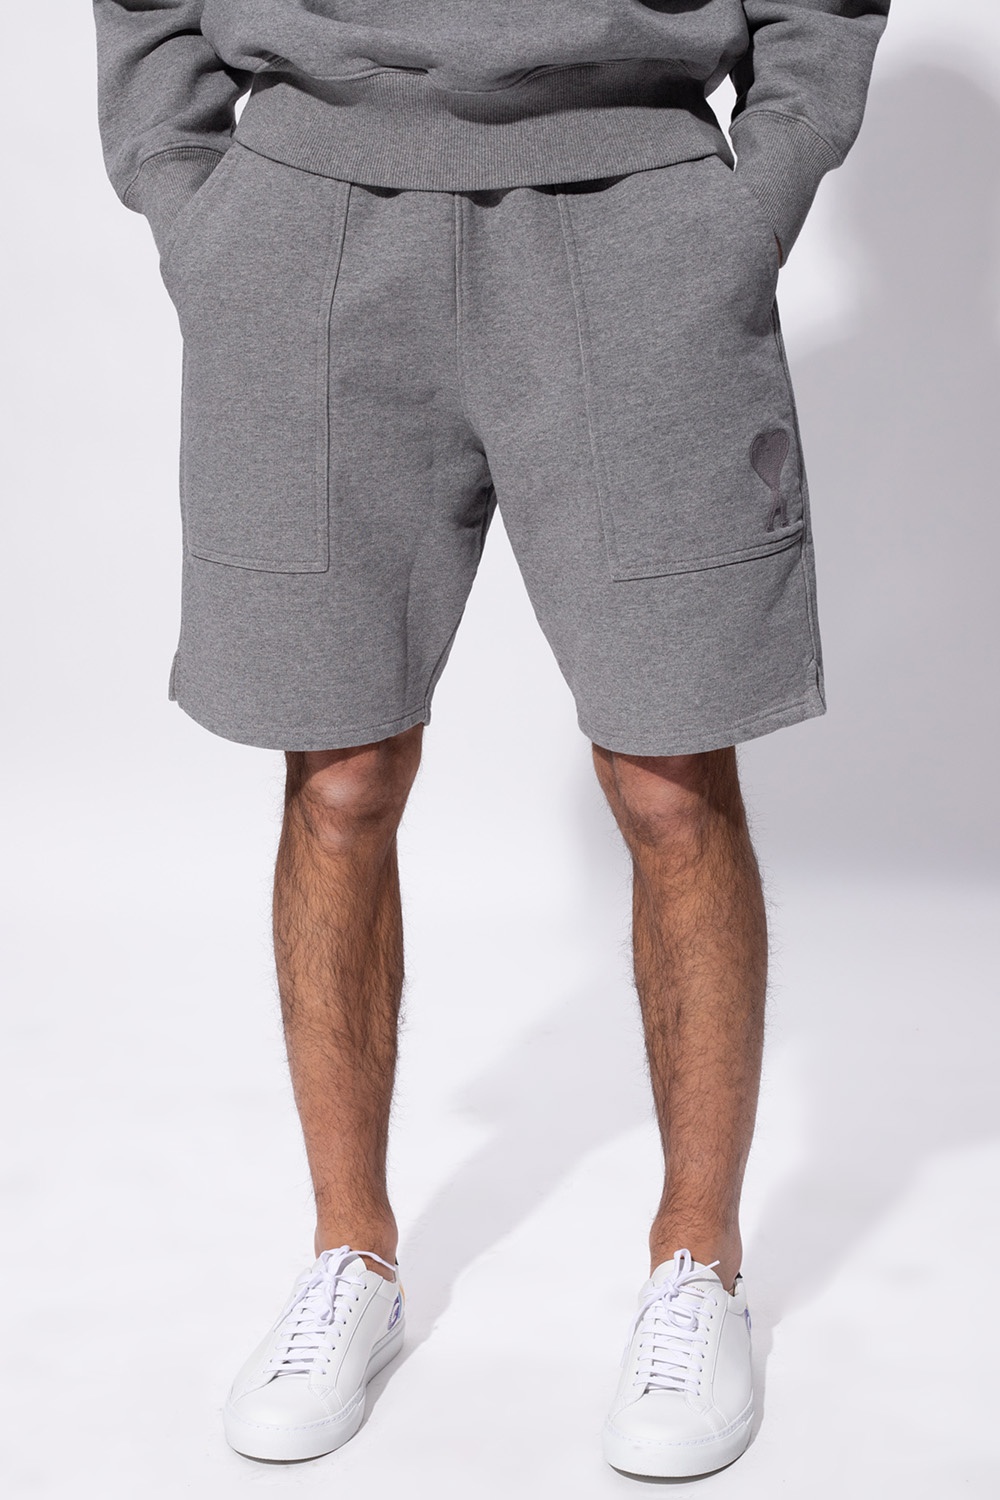 Ami Alexandre Mattiussi Sweat shorts with logo | Men's Clothing 